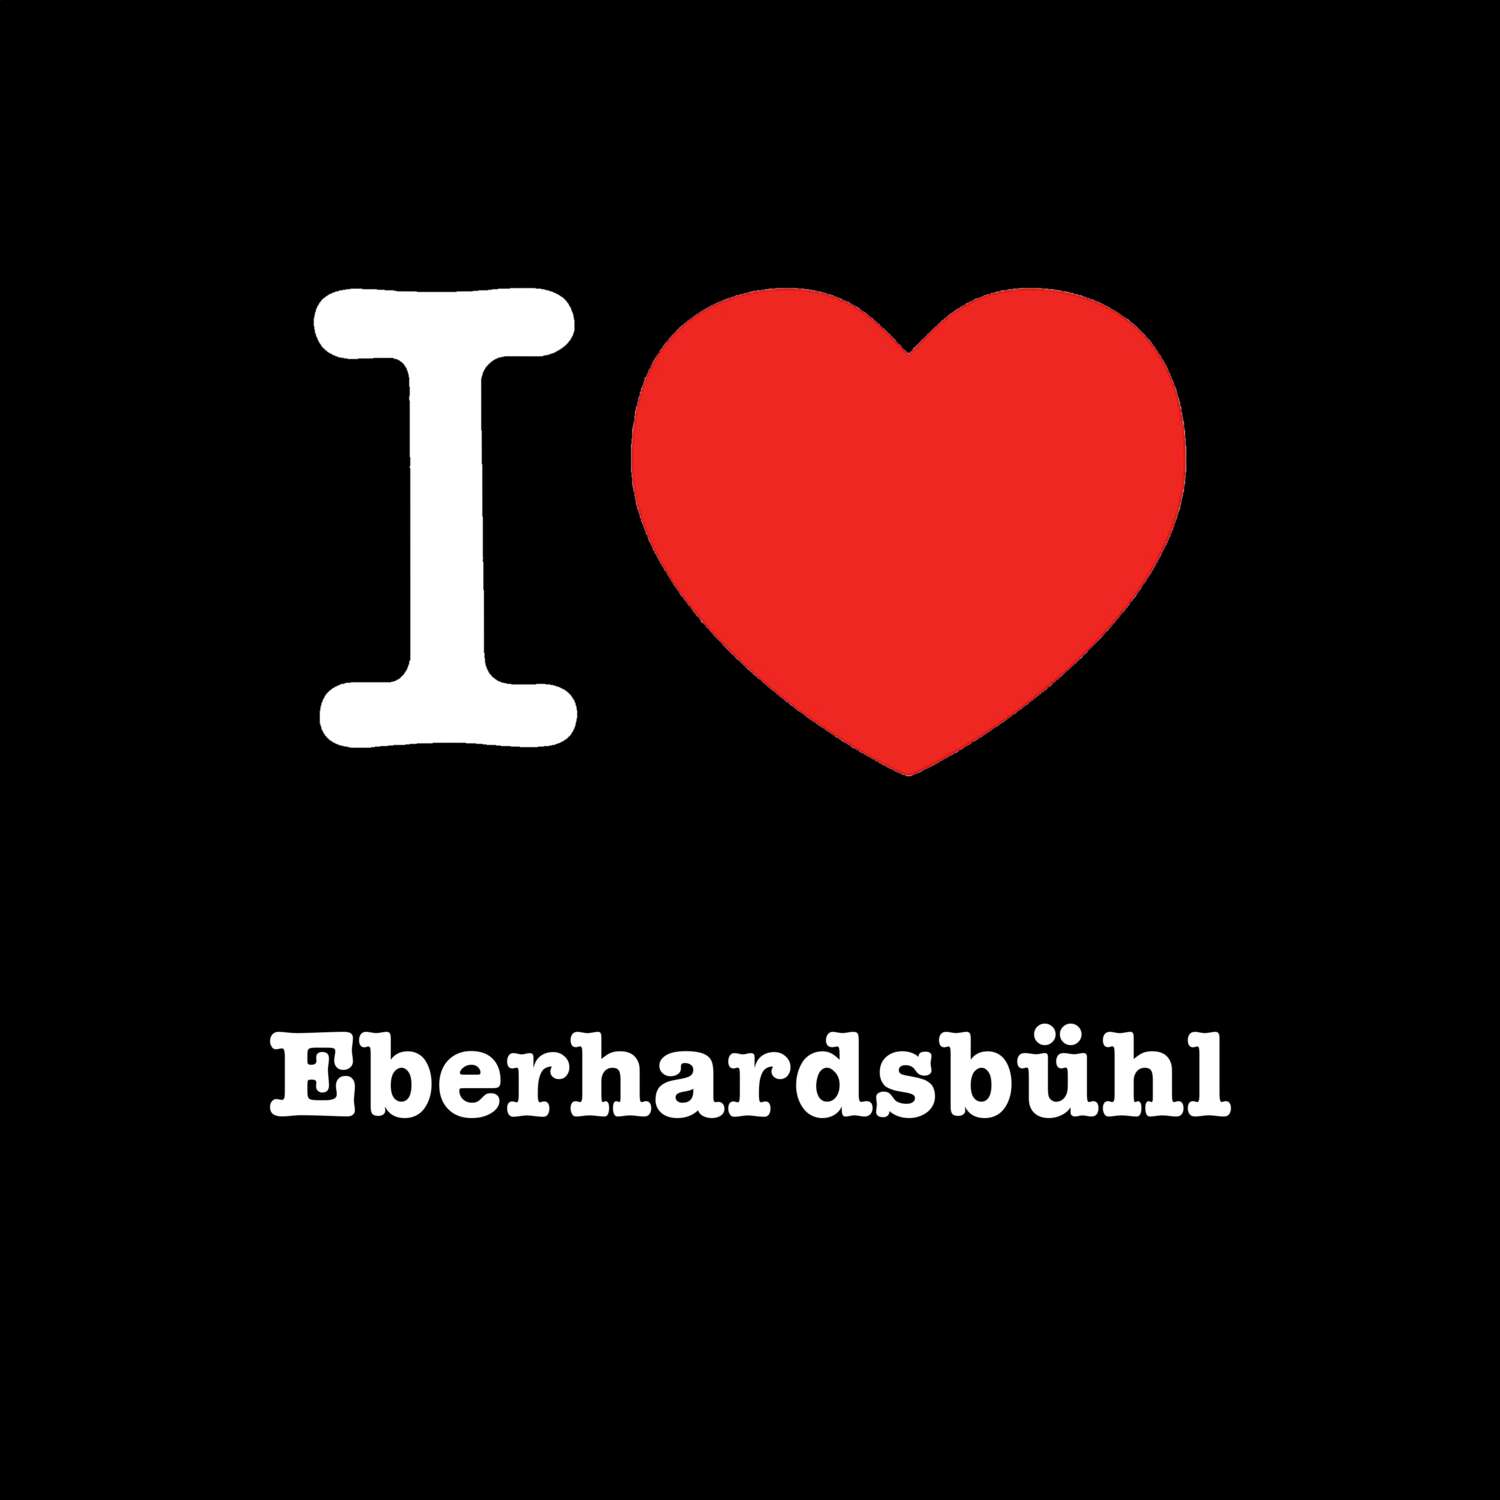 Eberhardsbühl T-Shirt »I love«